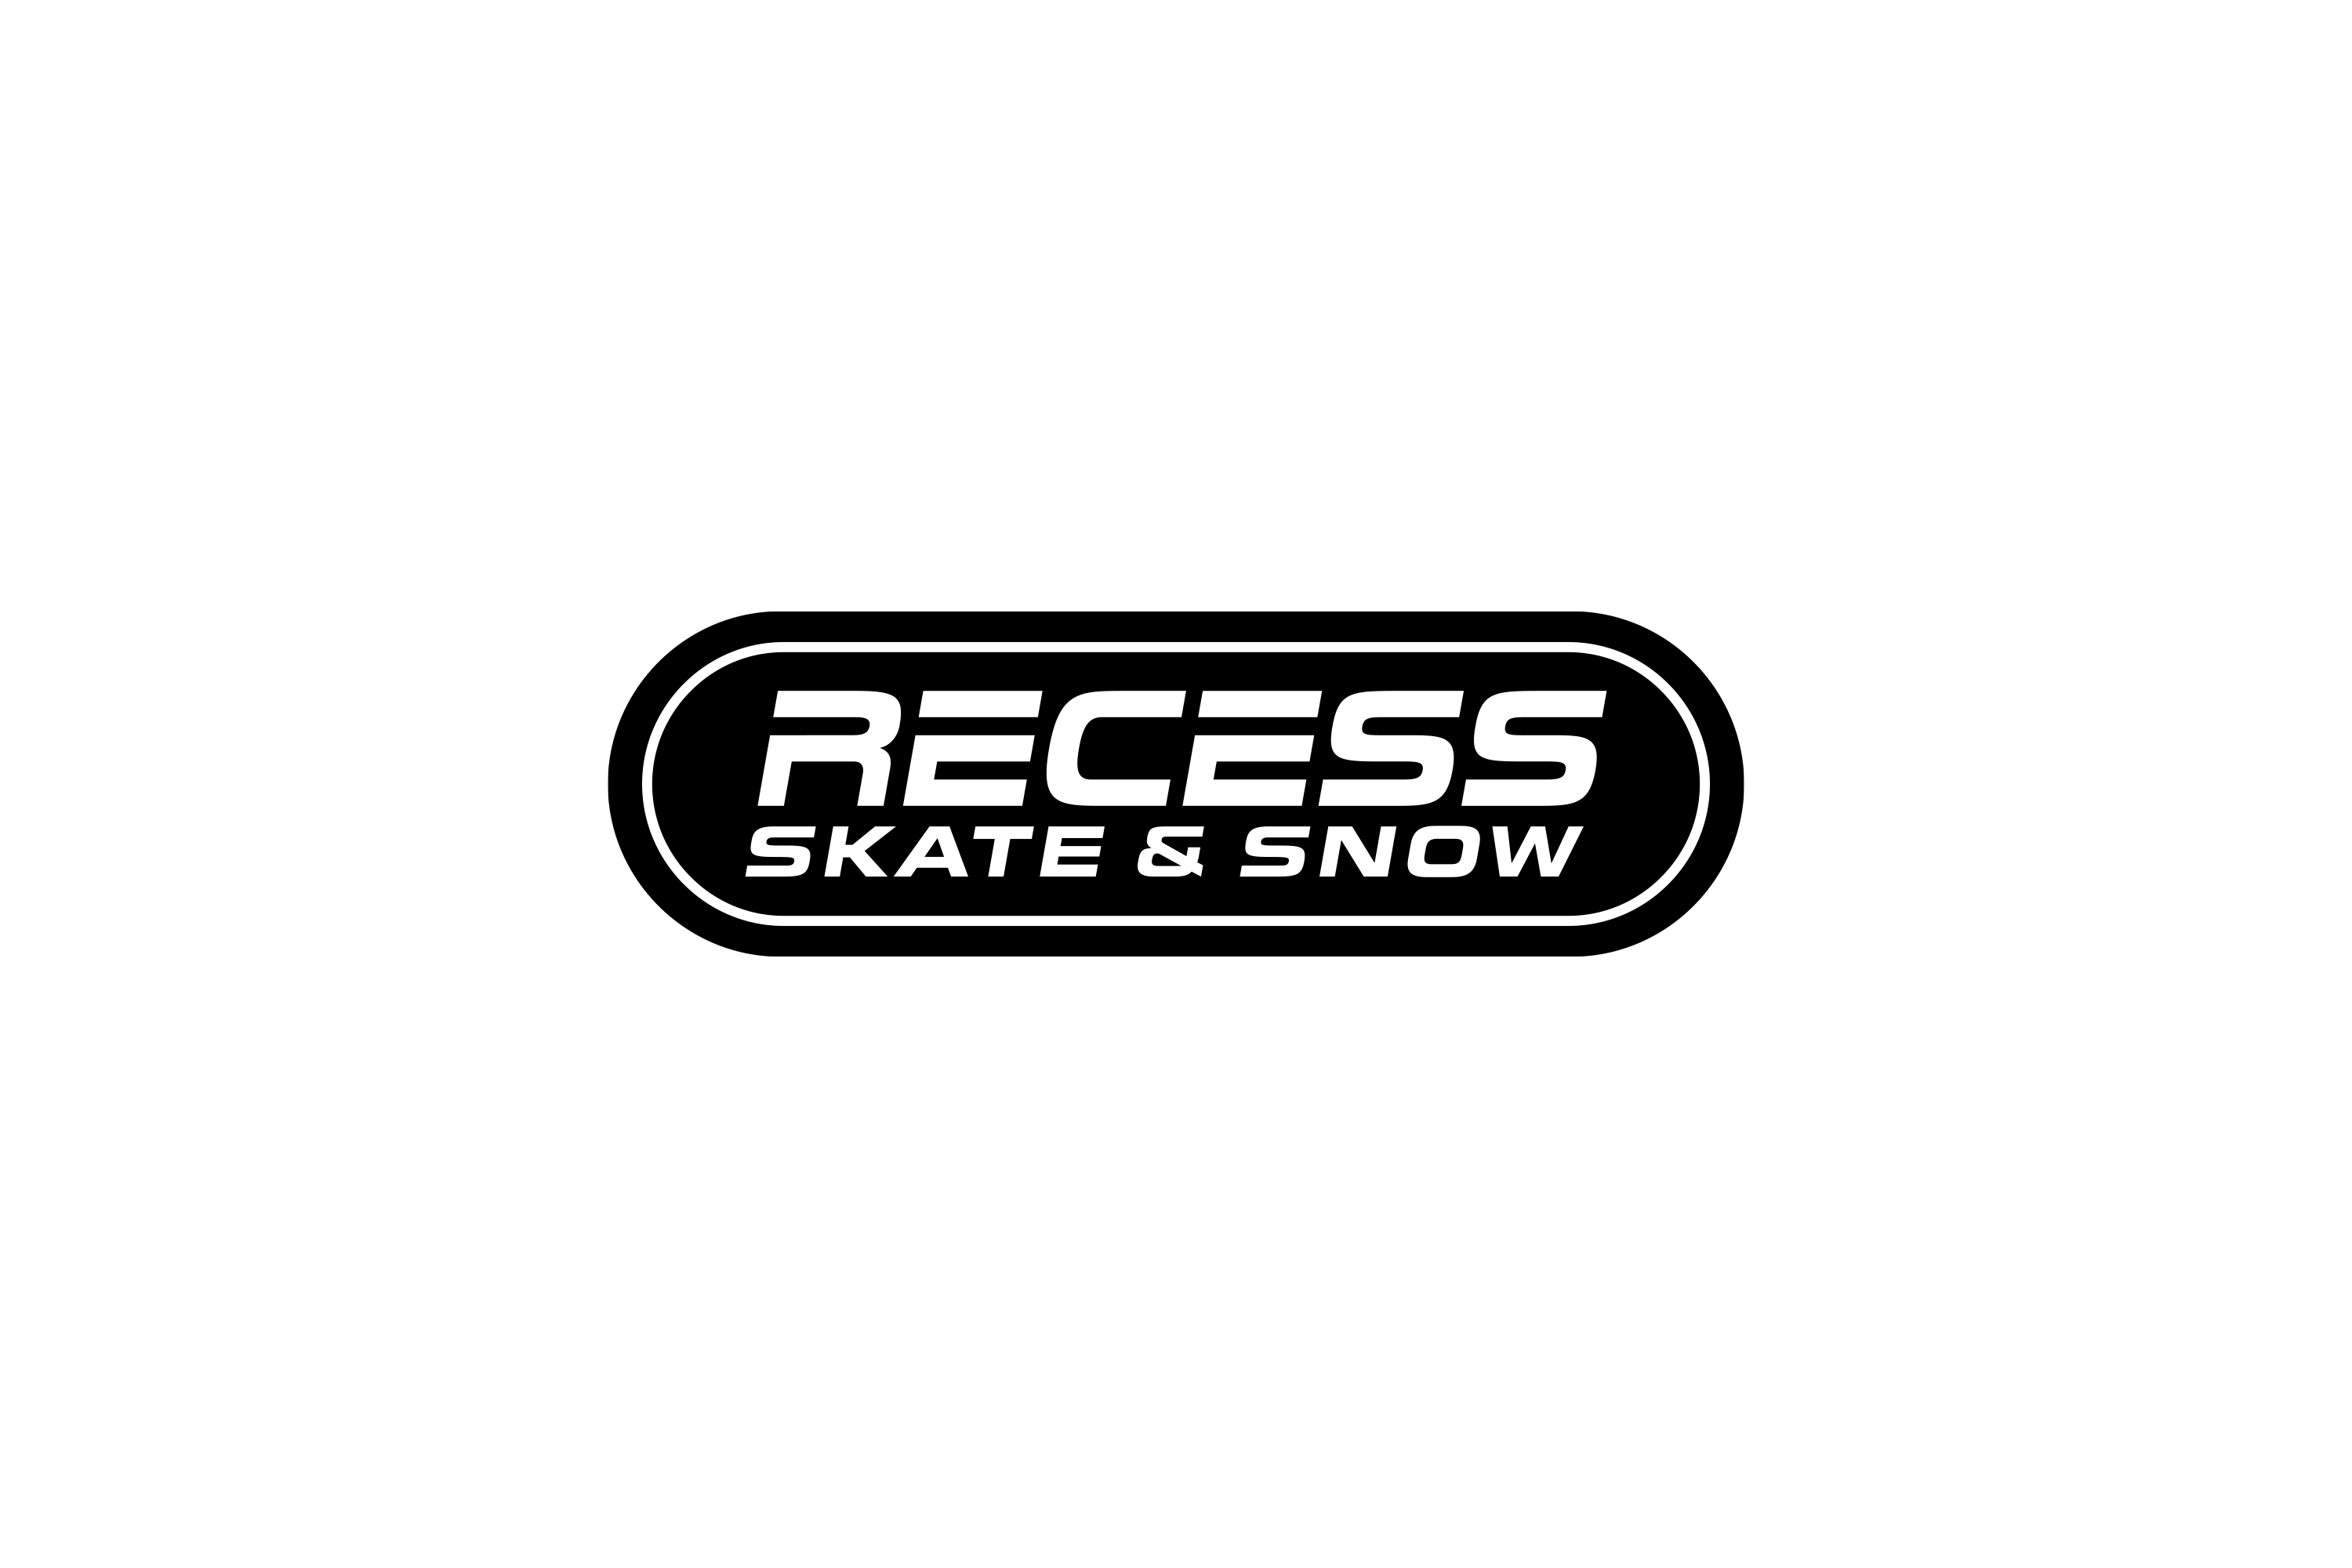 Chris-Reynolds-Logos-Recess-2